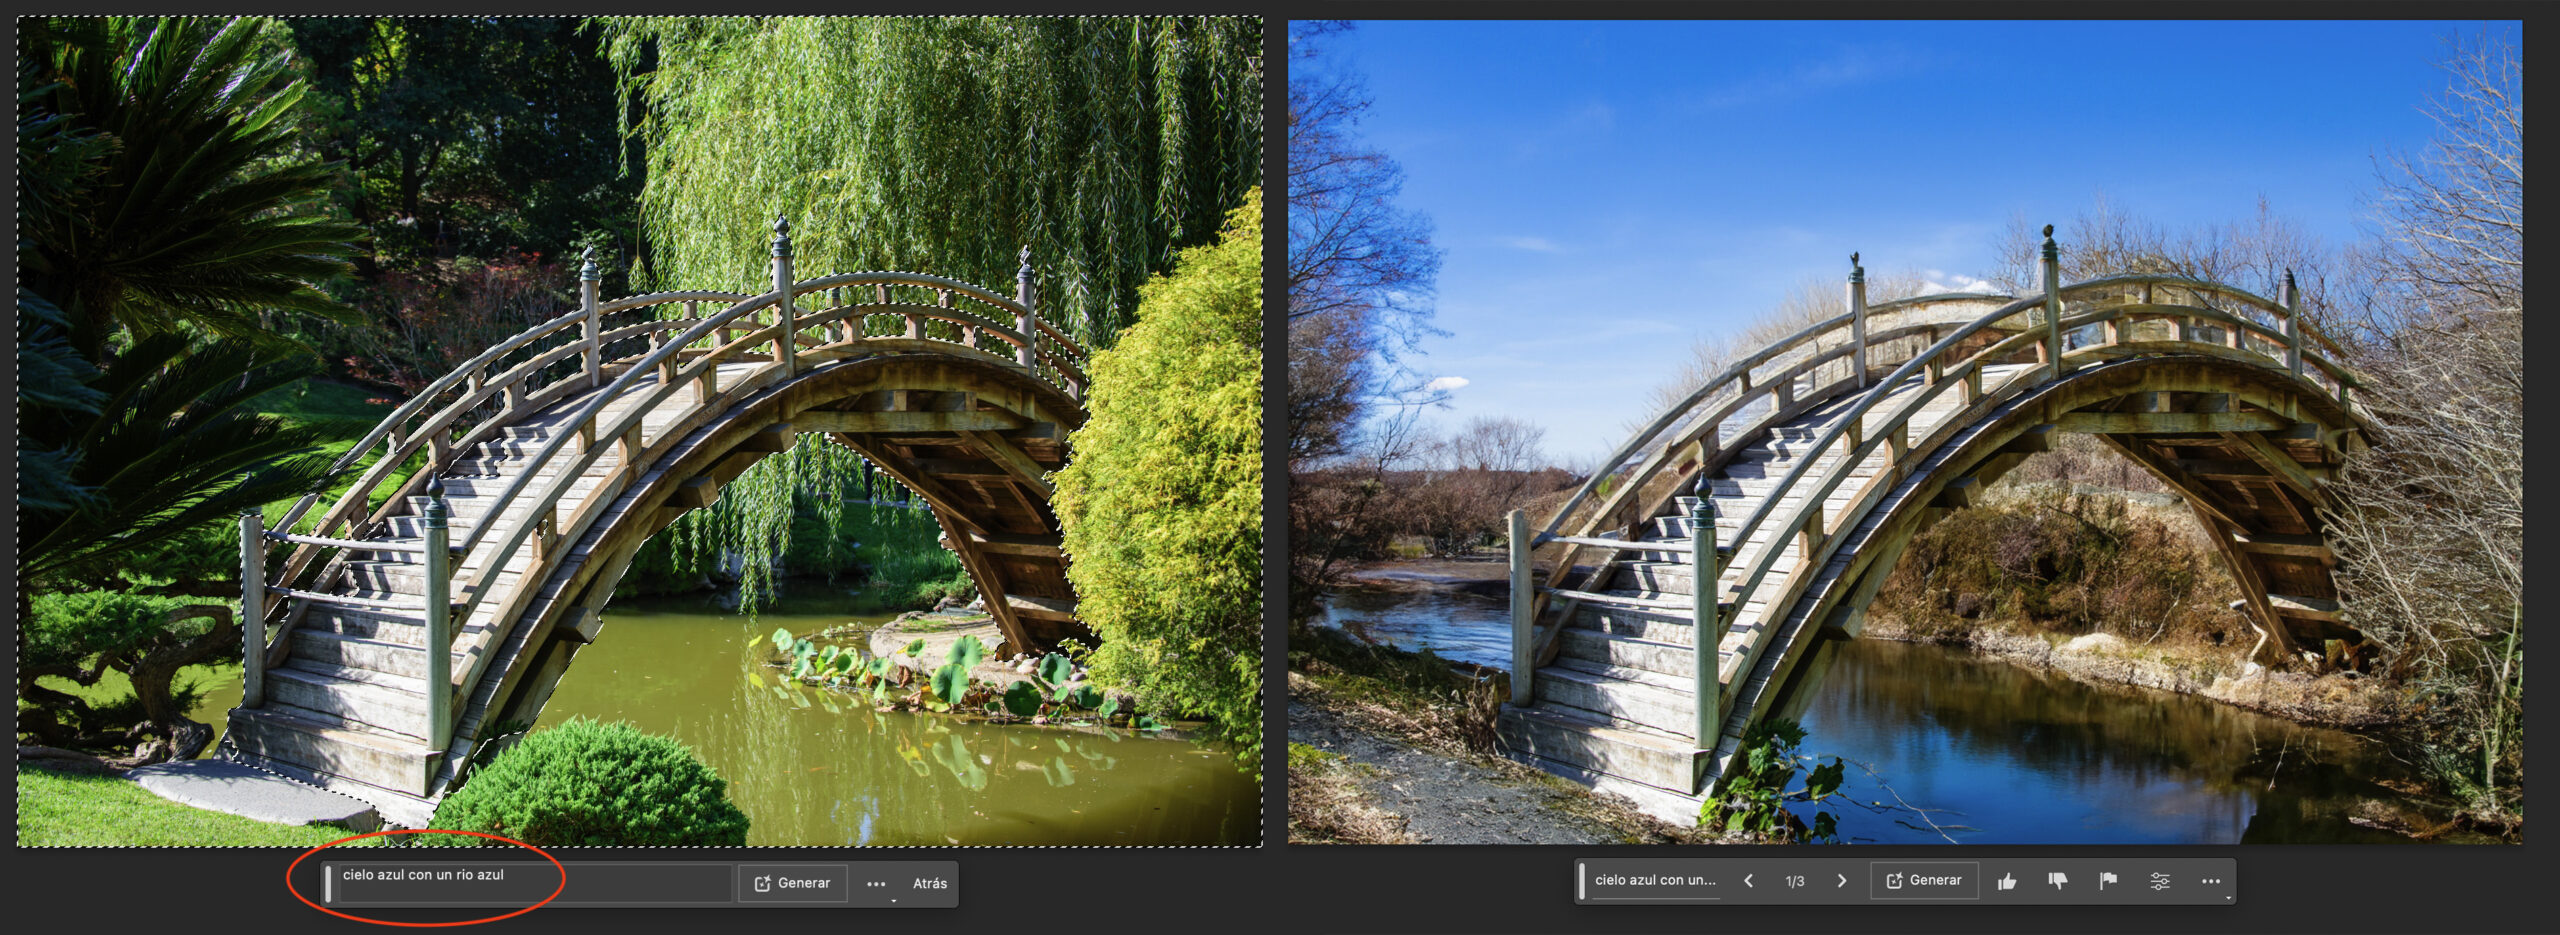 Photoshop 發布全新生成式擴展工作流程 以及為 Firefly 驅動的功能提供繁體中文支援 @3C 達人廖阿輝